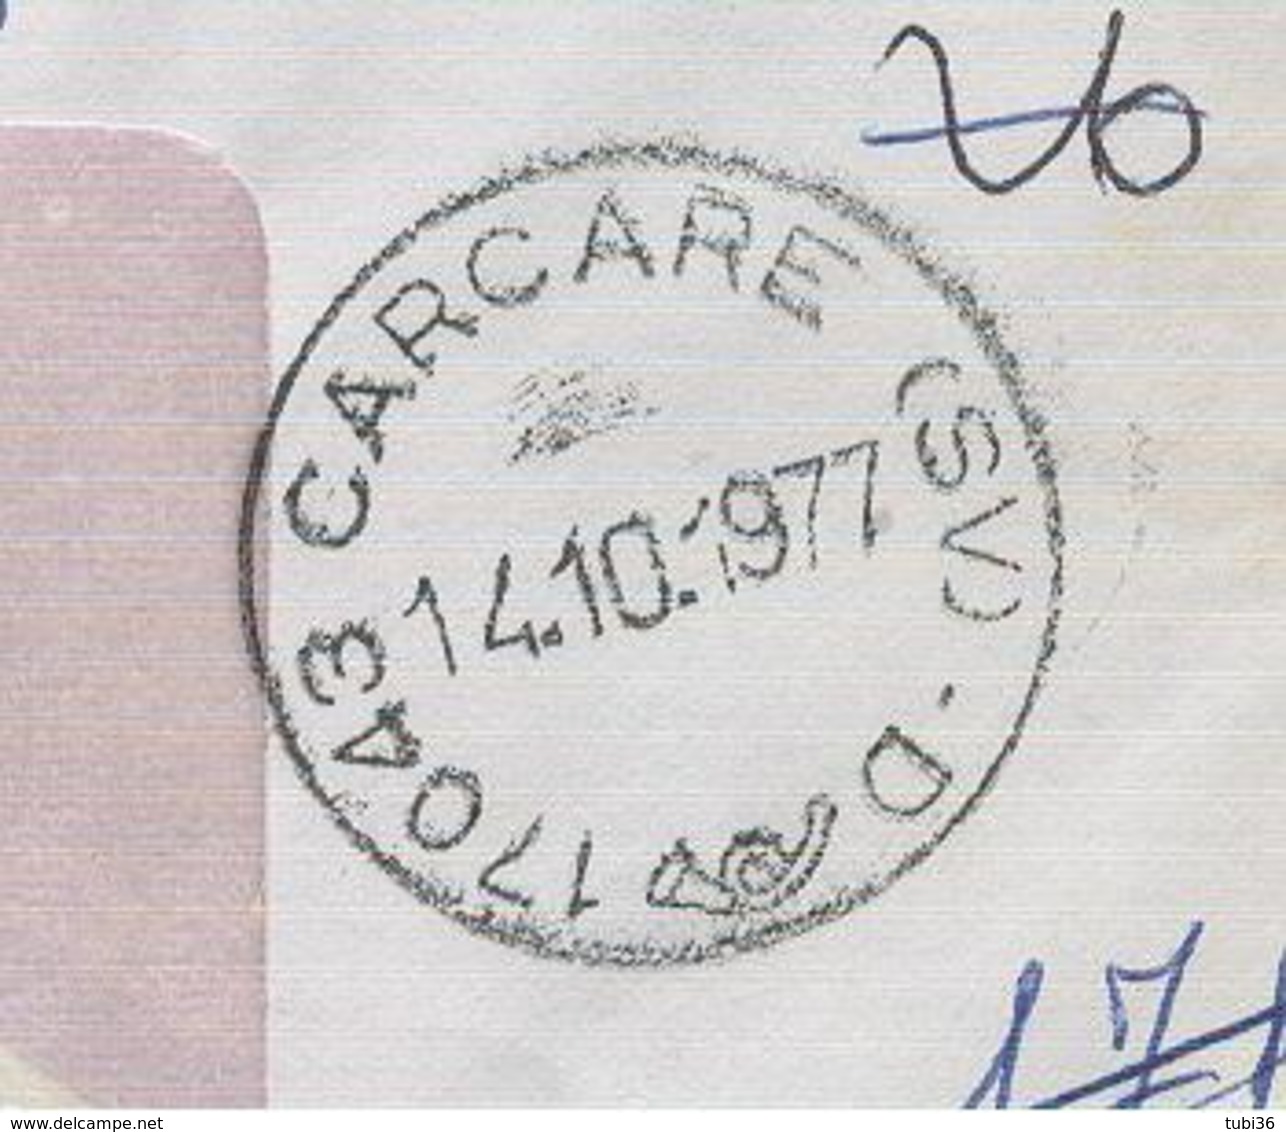 S.GIORGIO £.500+10+10 SIRACUSANA,TARIFFA RACCOMANDATA,1977,TIMBRO POSTE CARCARE(SAVONA)-CERAMICA ILSA,CARCARE, - 1971-80: Storia Postale